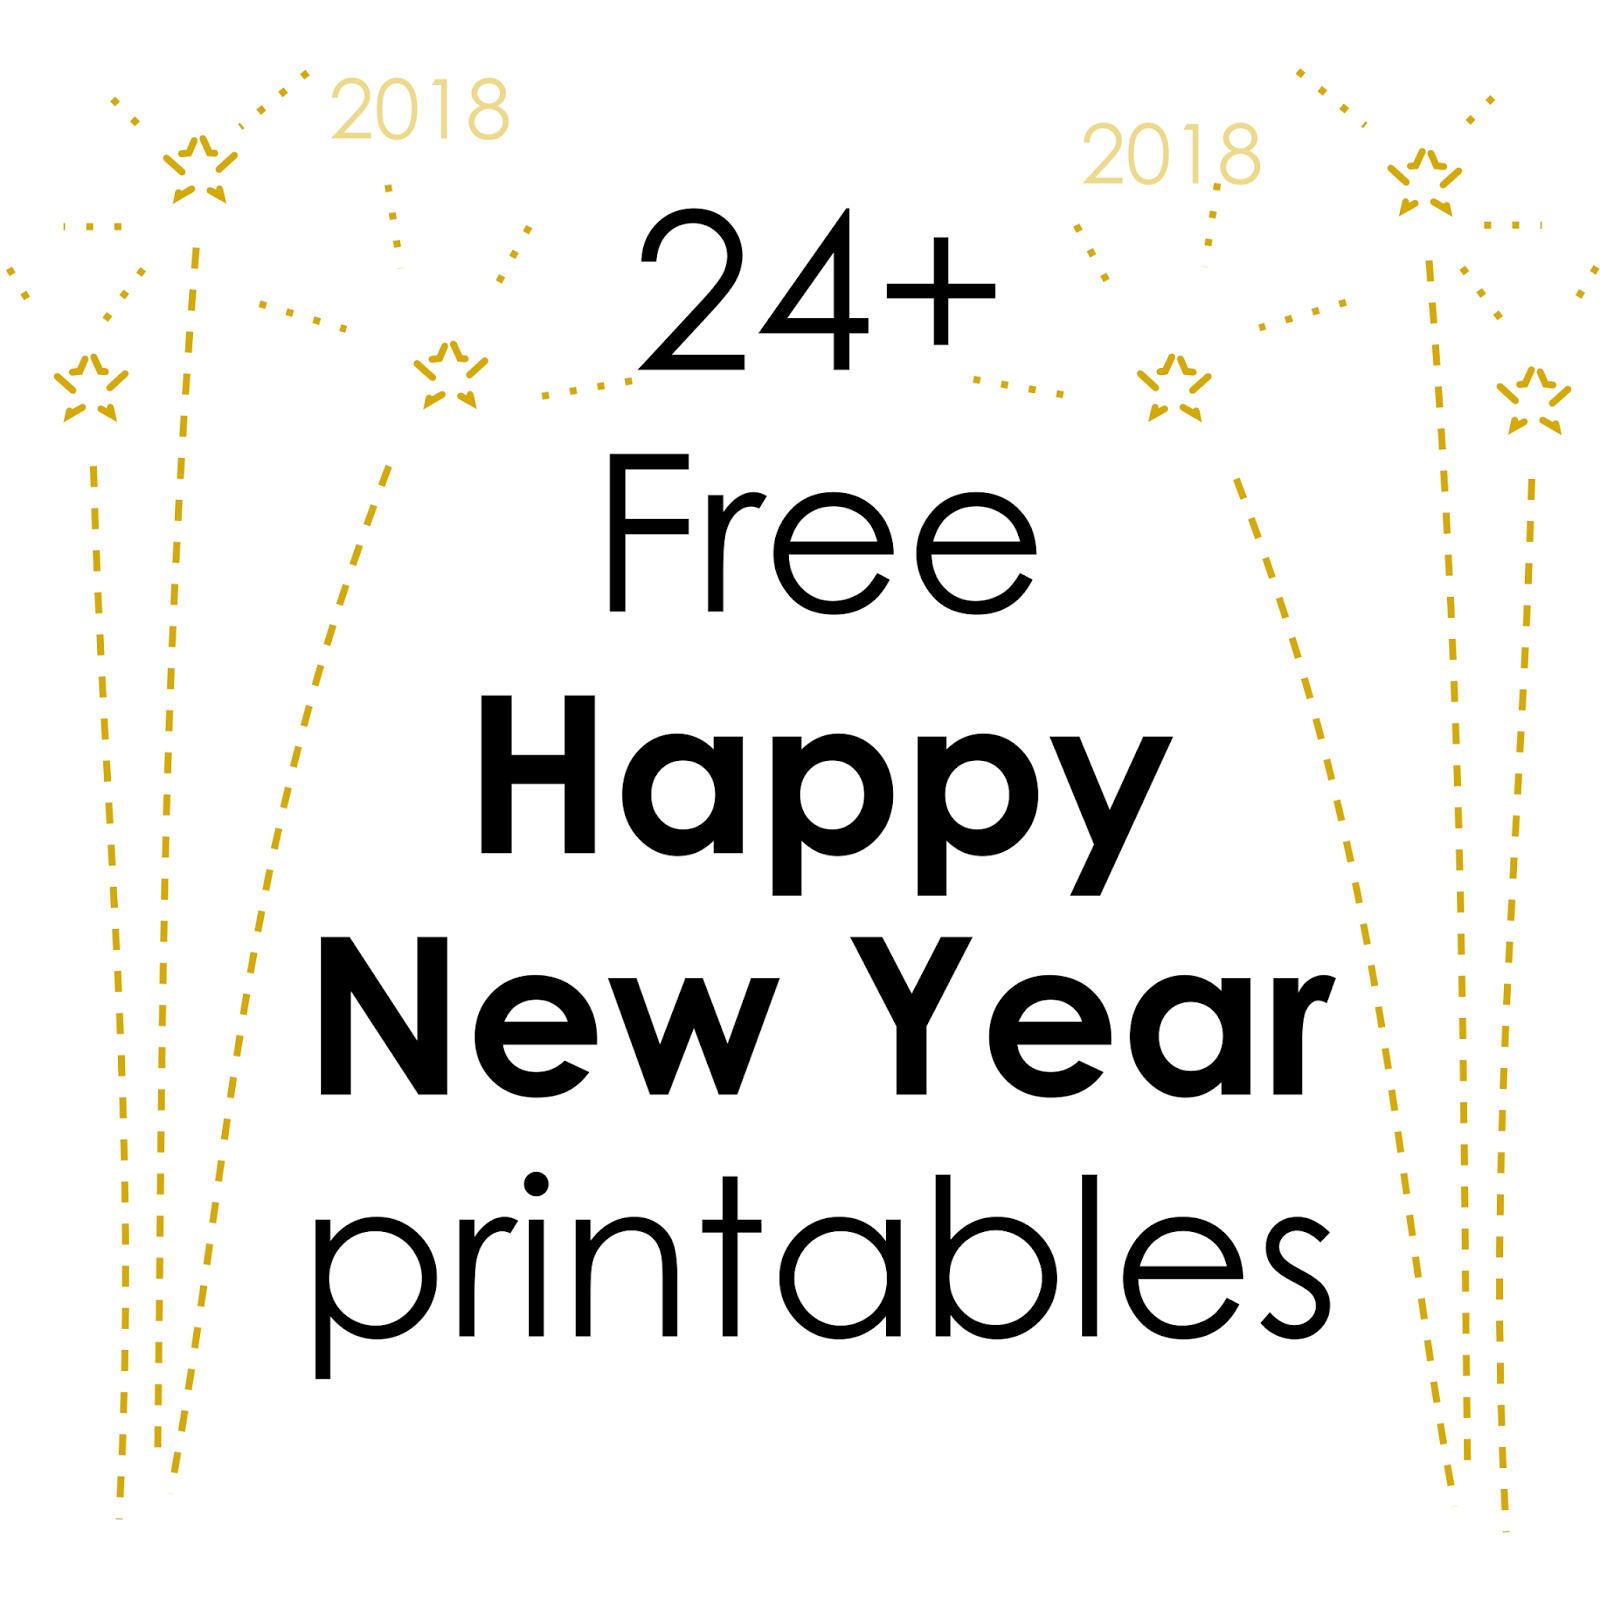 Free Printable Happy New Year 2024